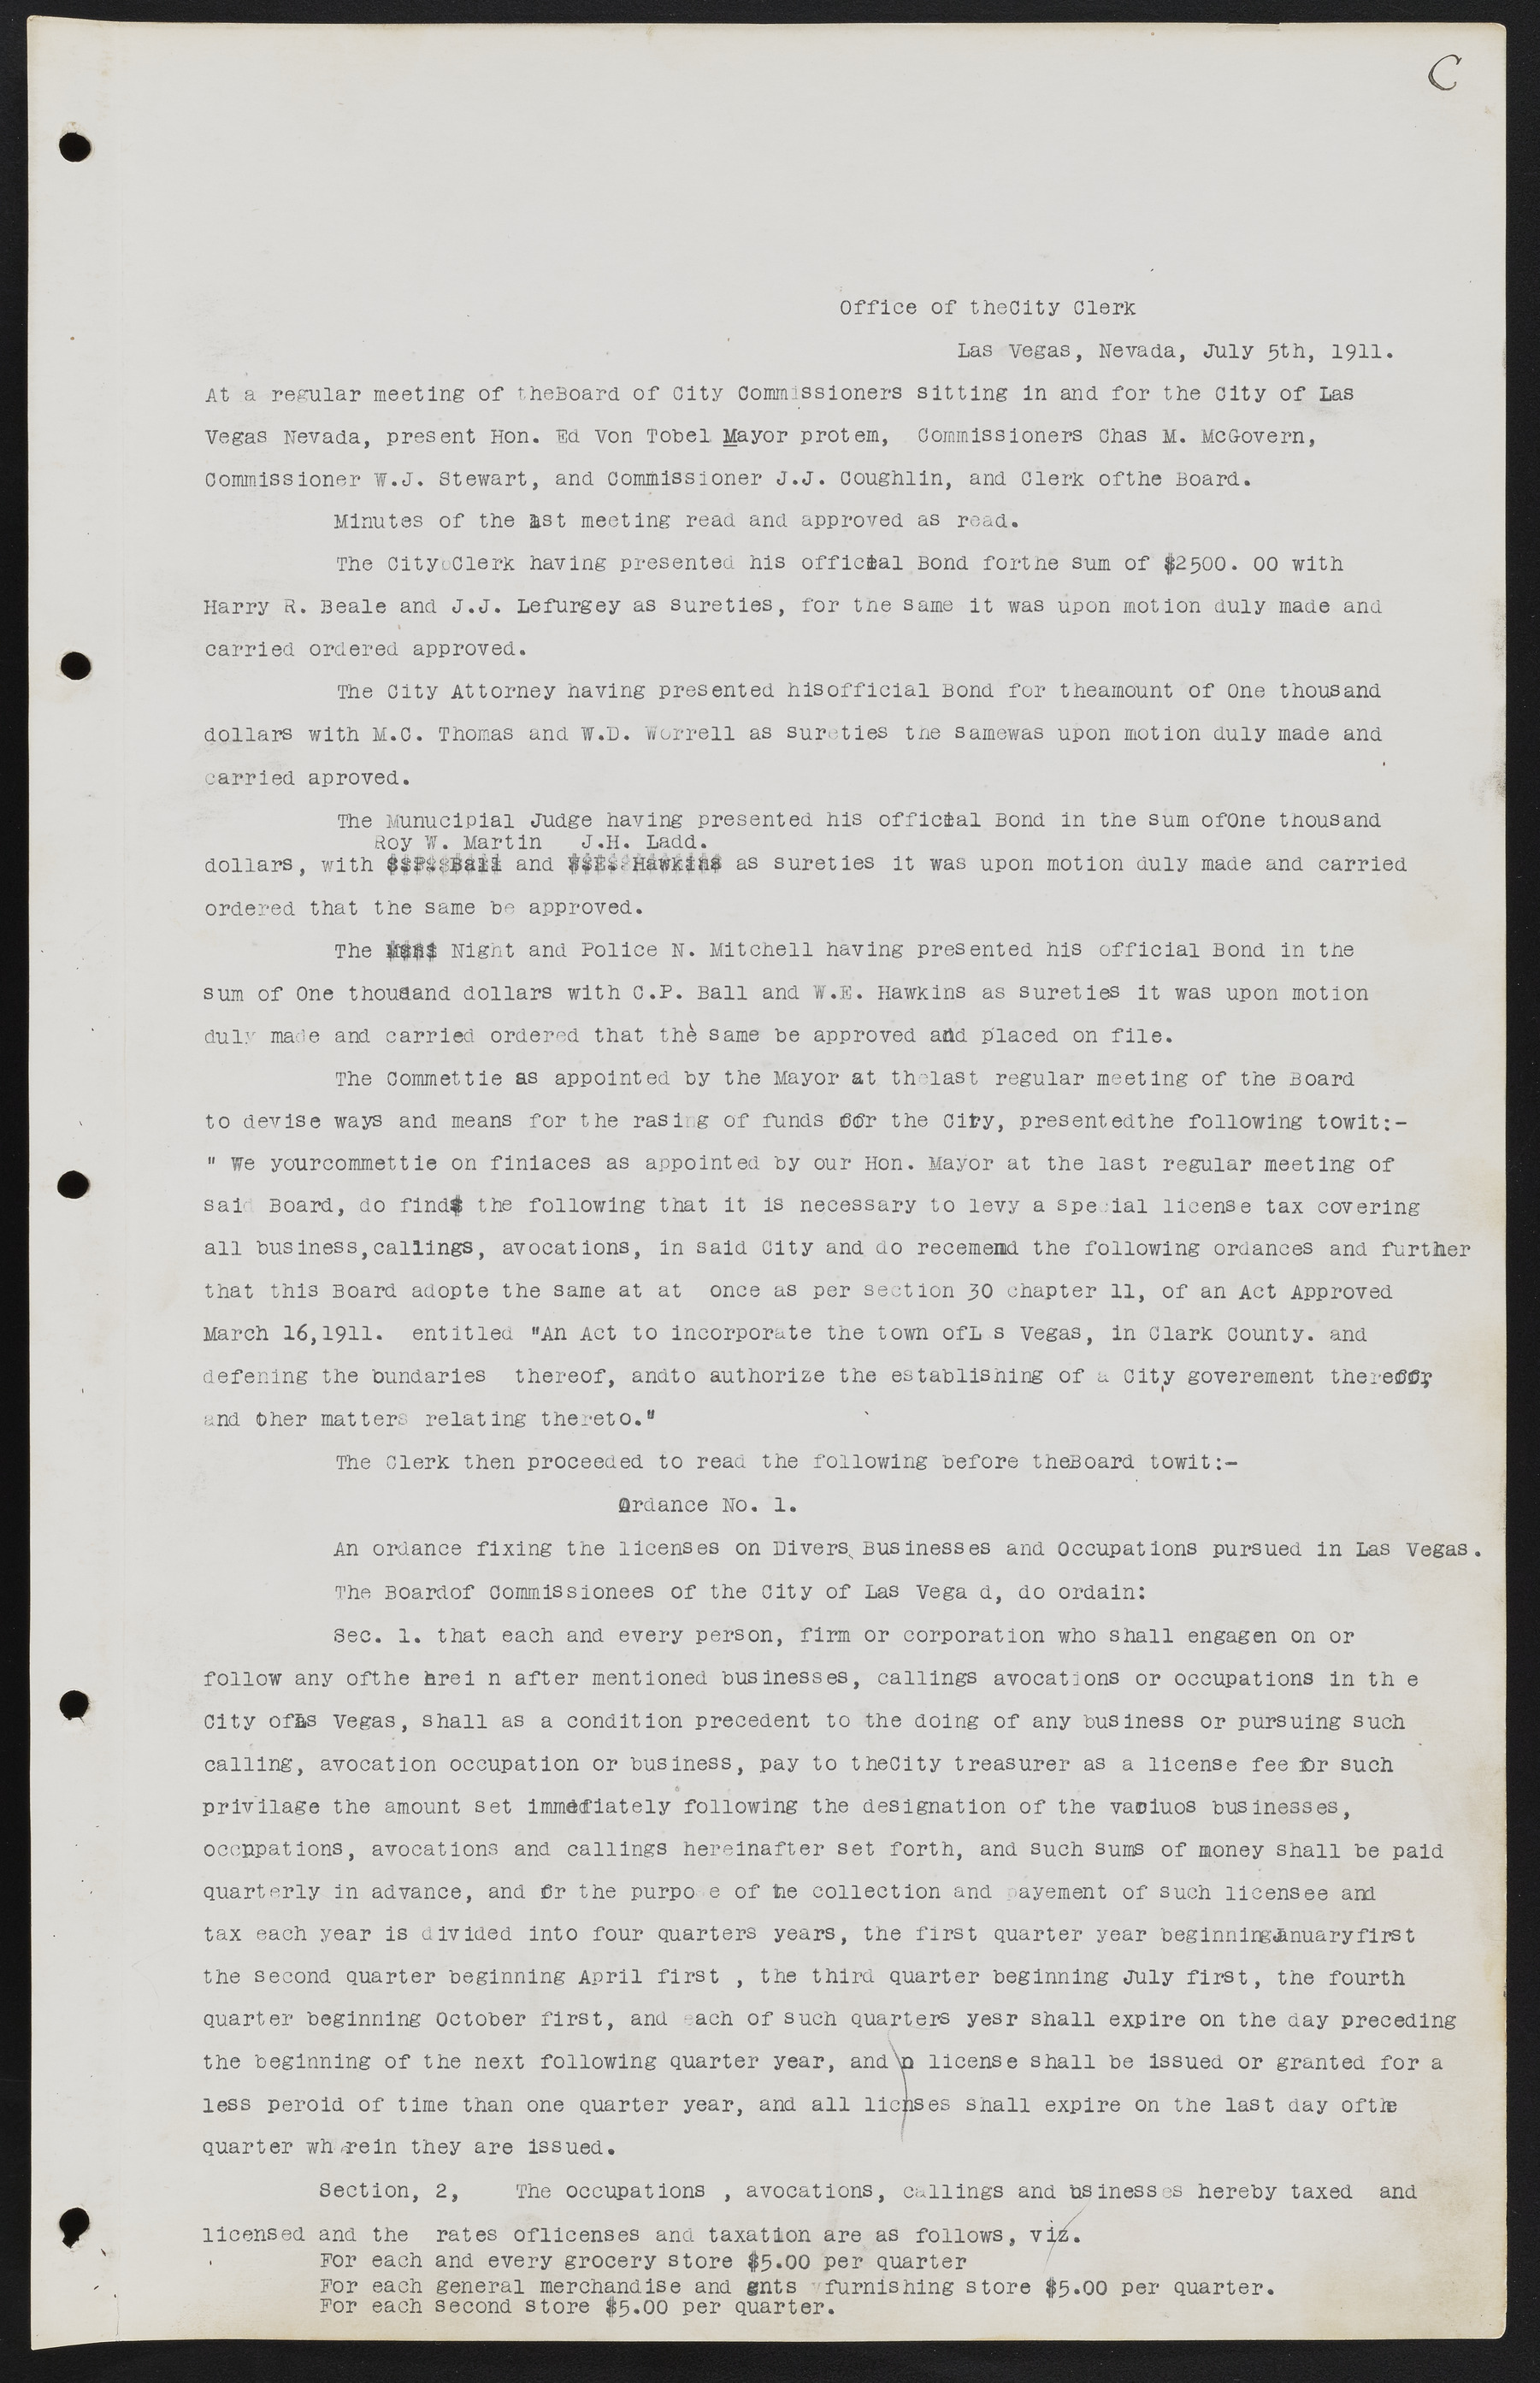 Las Vegas City Commission Minutes, June 22, 1911 to February 7, 1922, lvc000001-5